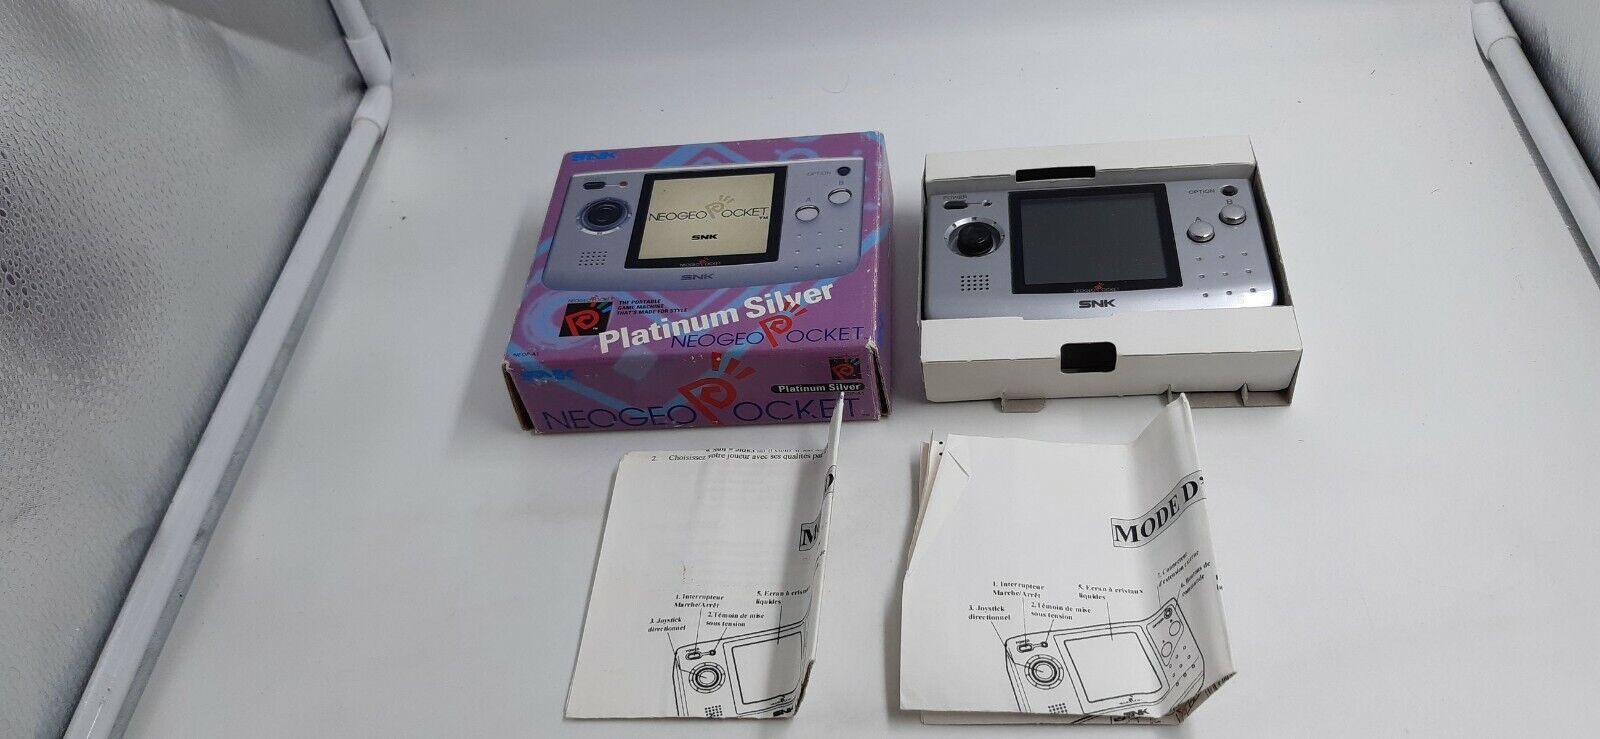 Console SNK Neo Geo Pocket Platinum Silver en boite